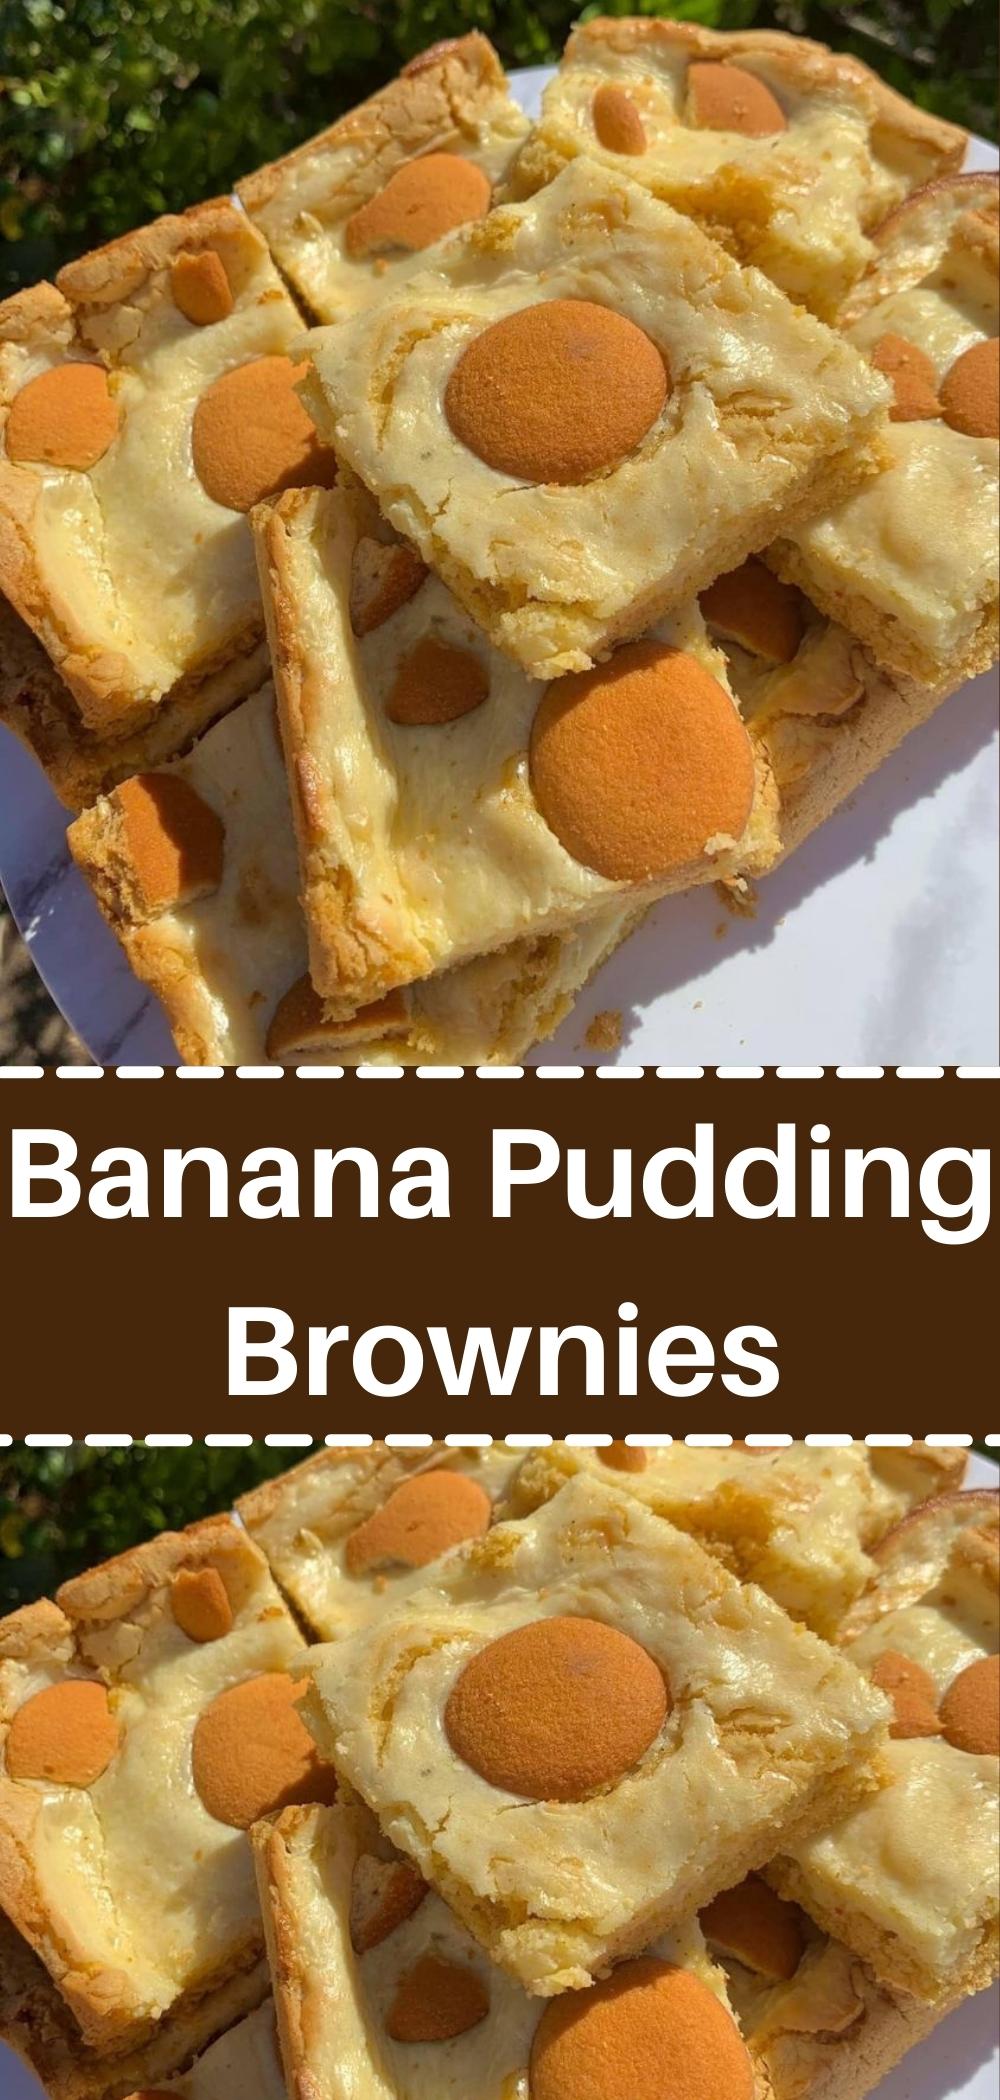 Banana Pudding Brownies